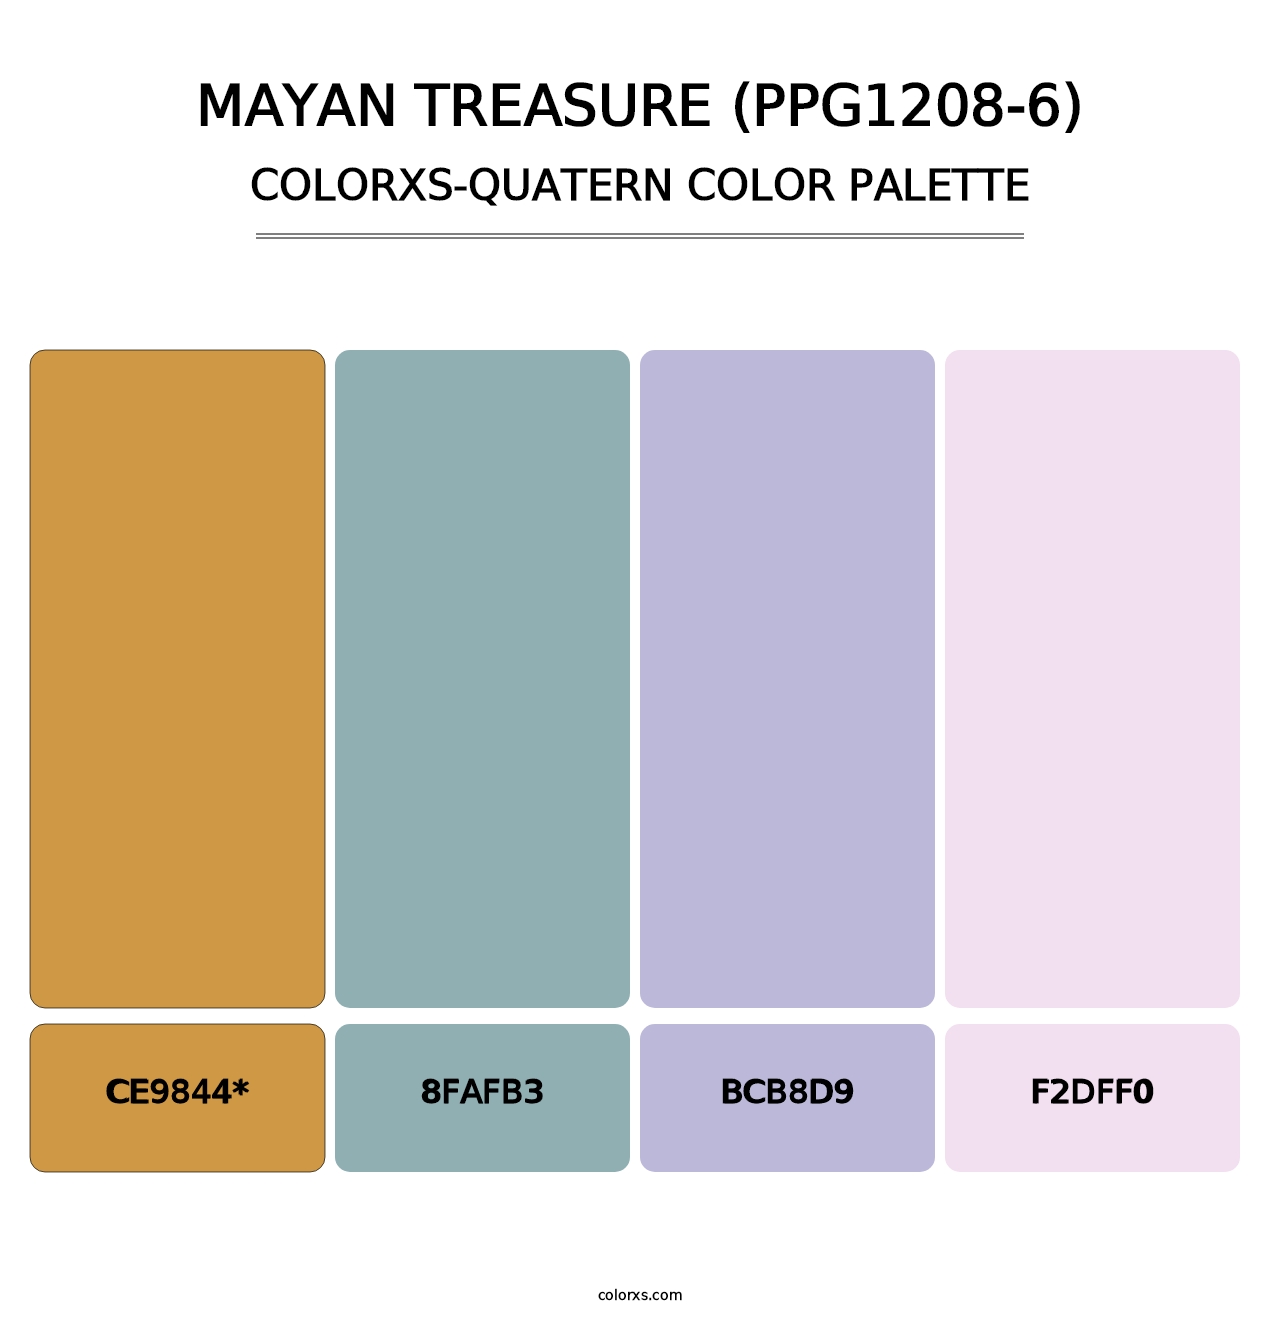 Mayan Treasure (PPG1208-6) - Colorxs Quatern Palette